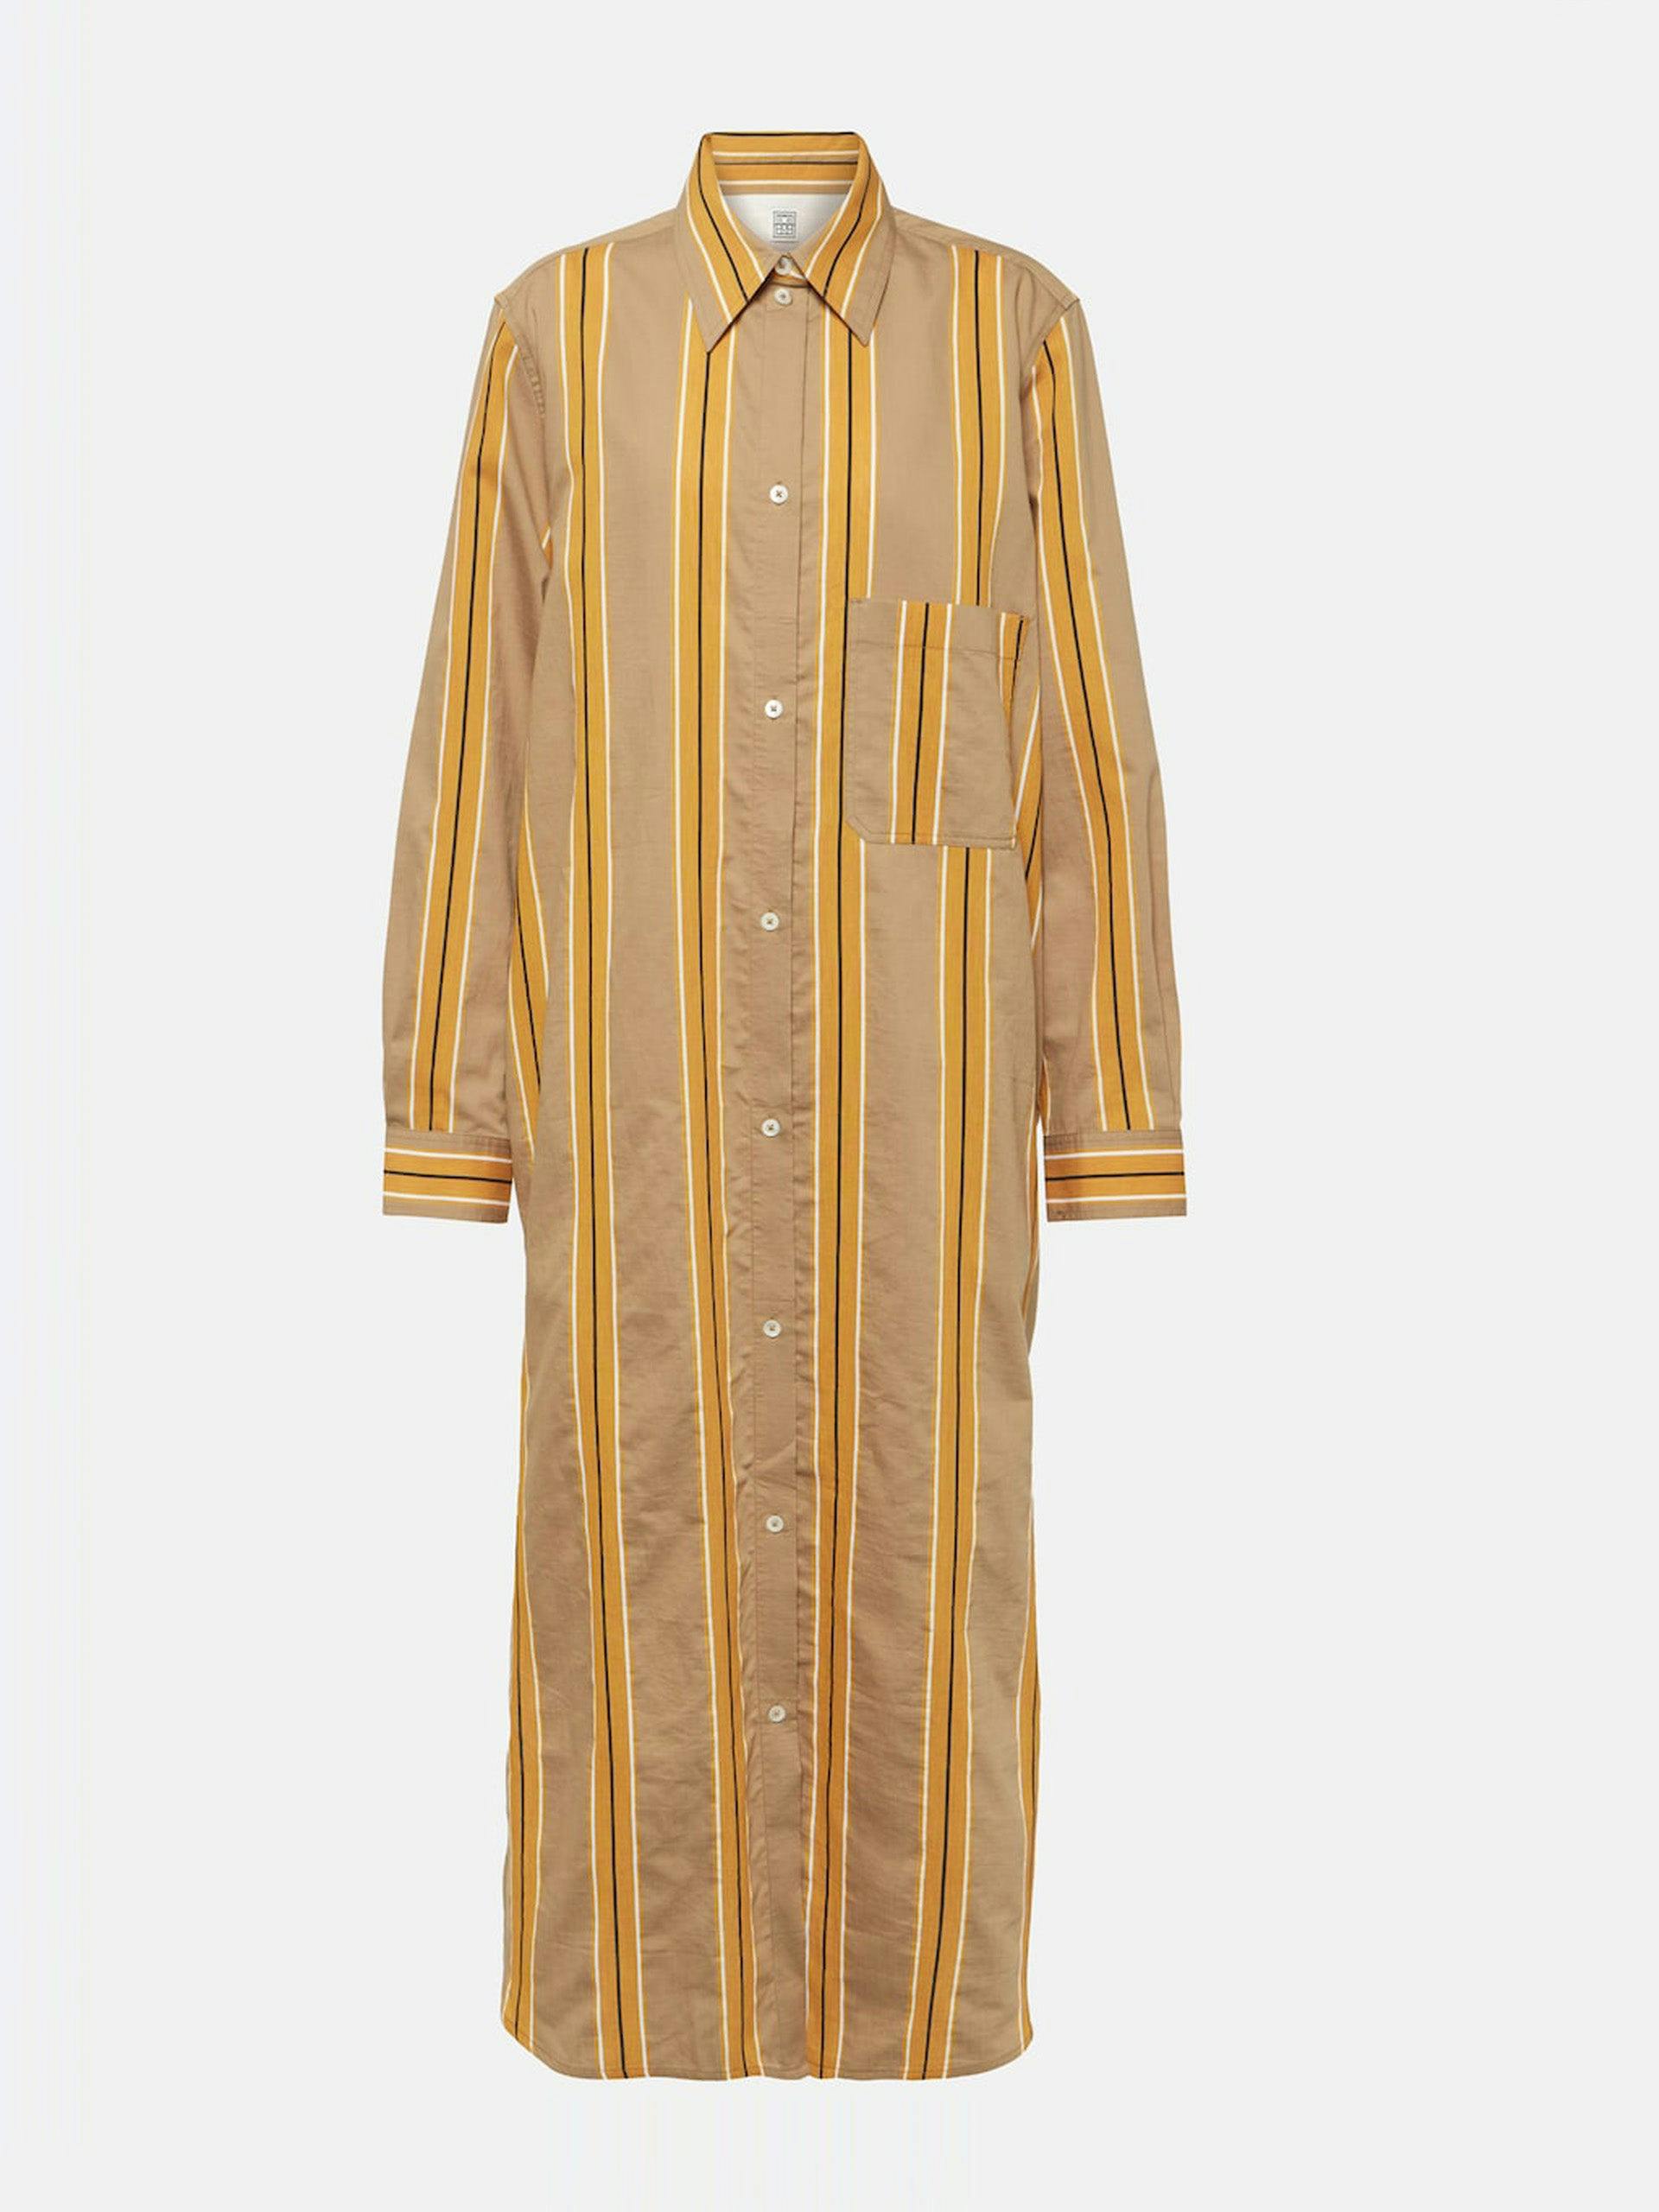 Jacquard striped cotton-blend shirt dress